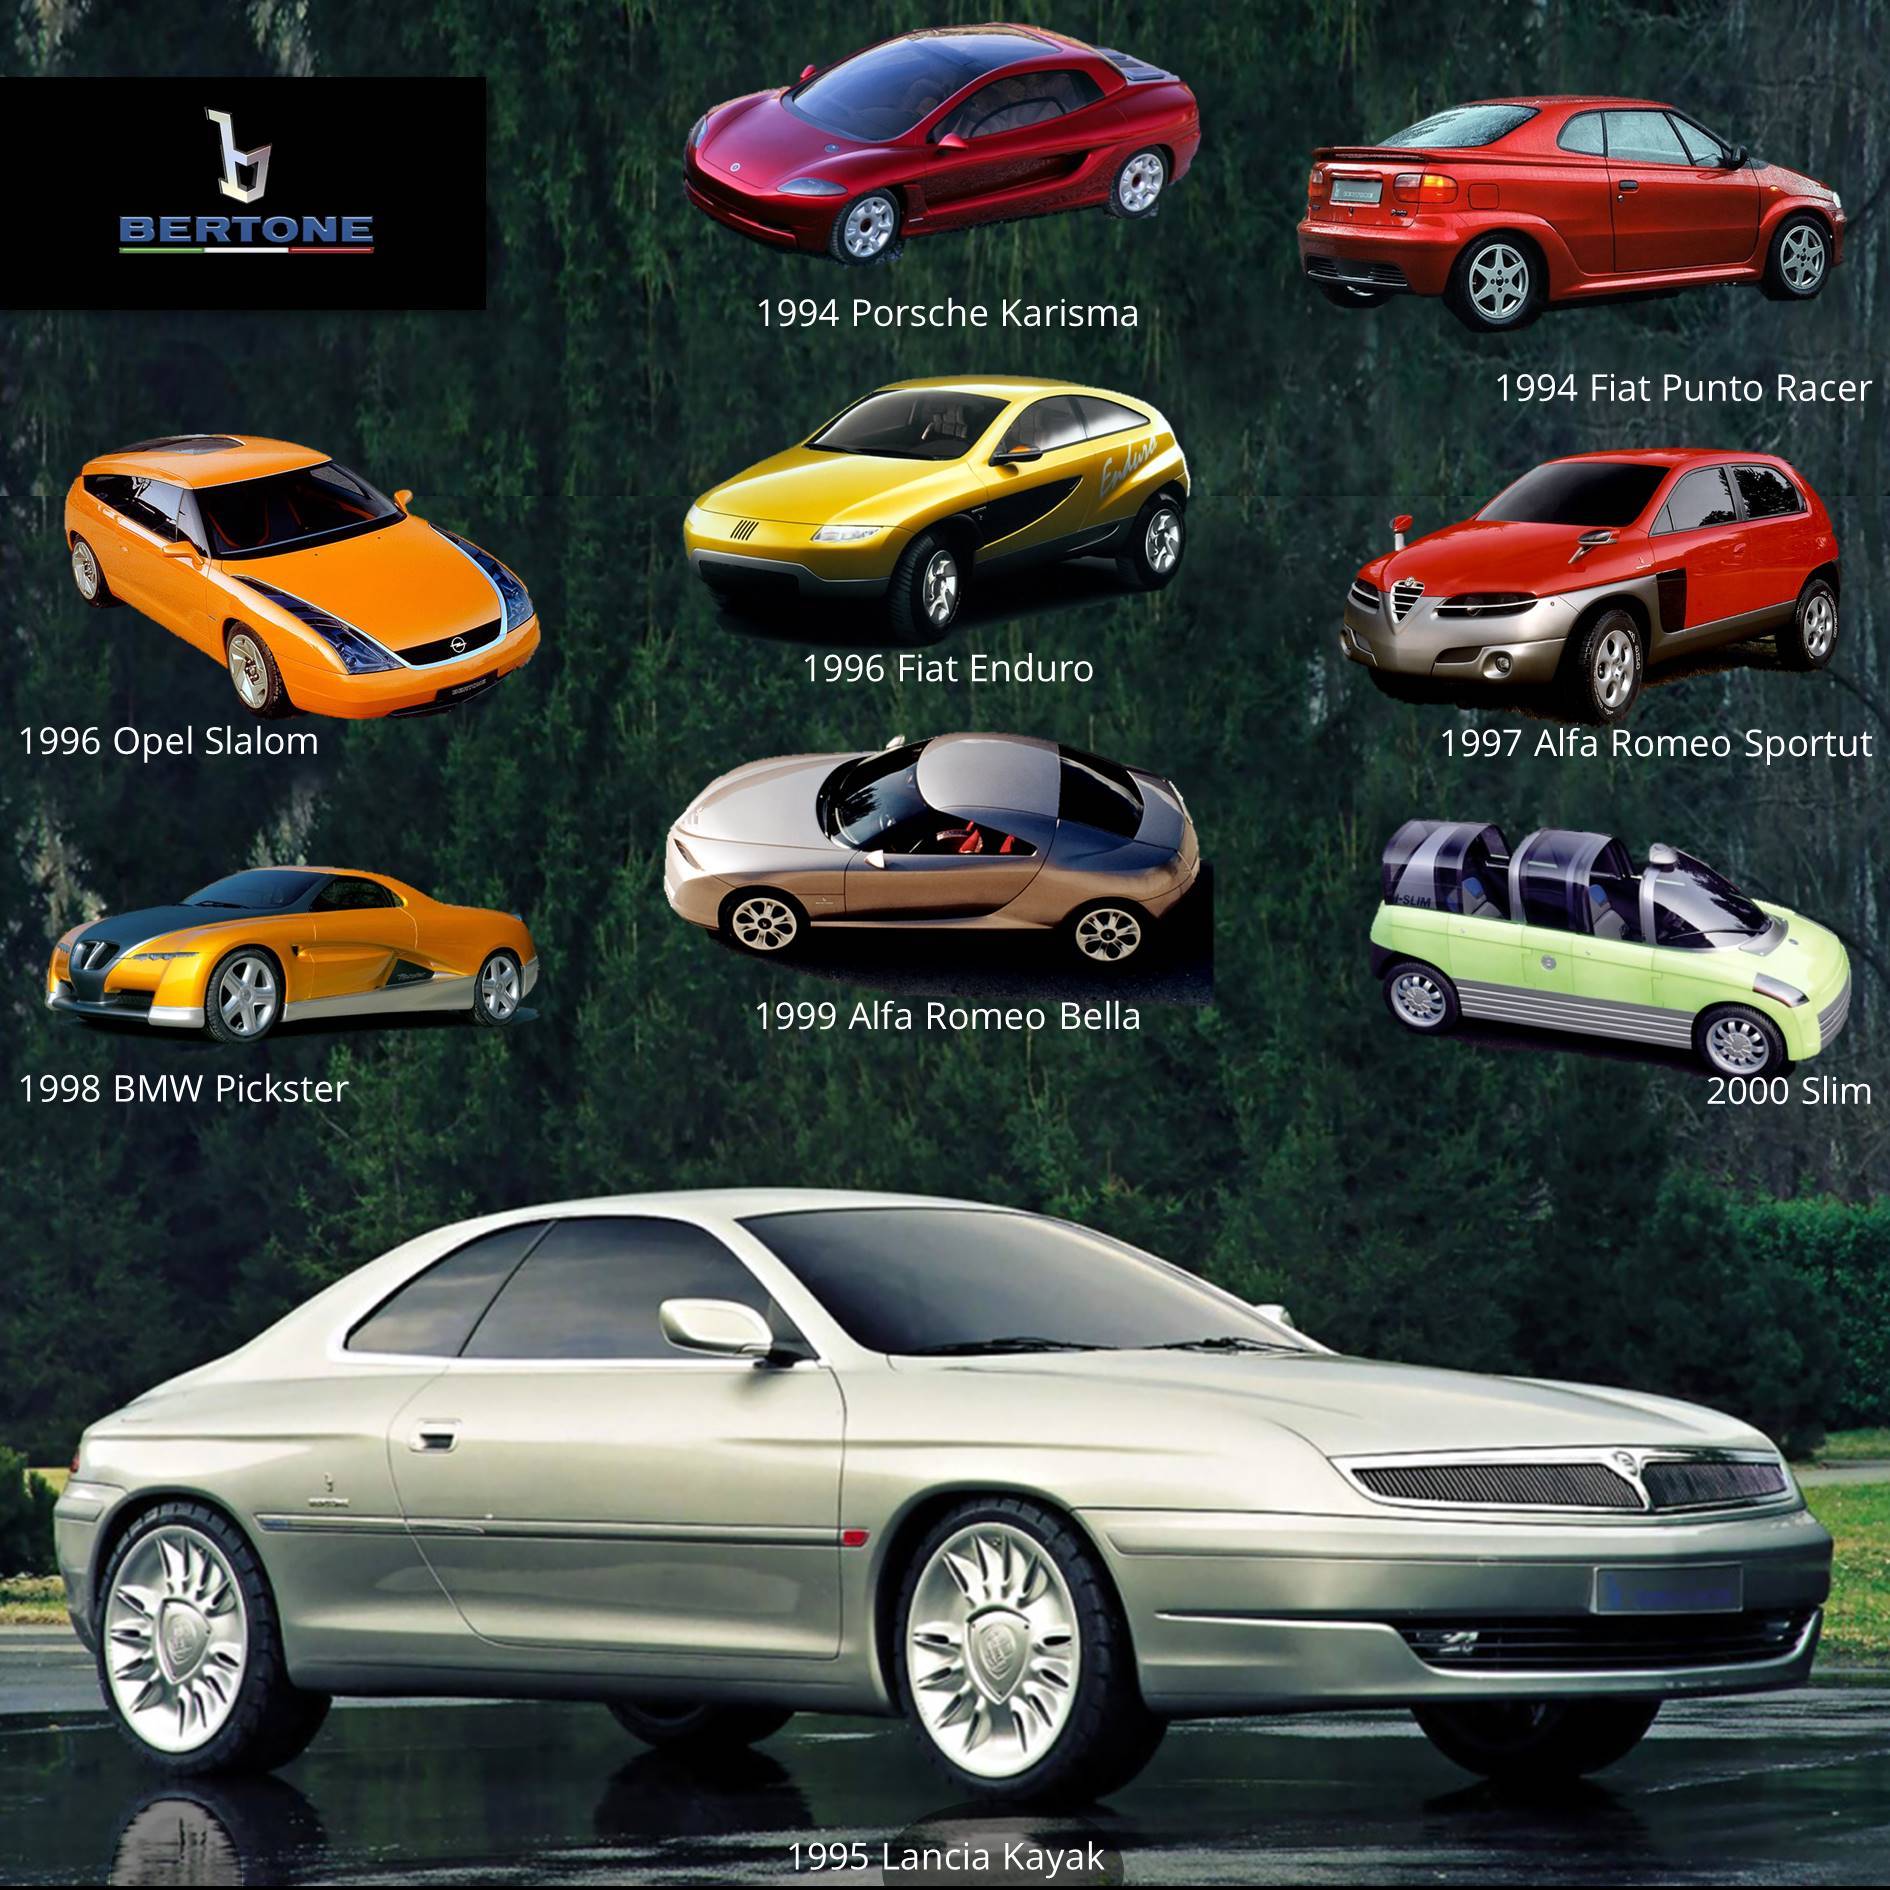 Bertone concept cars